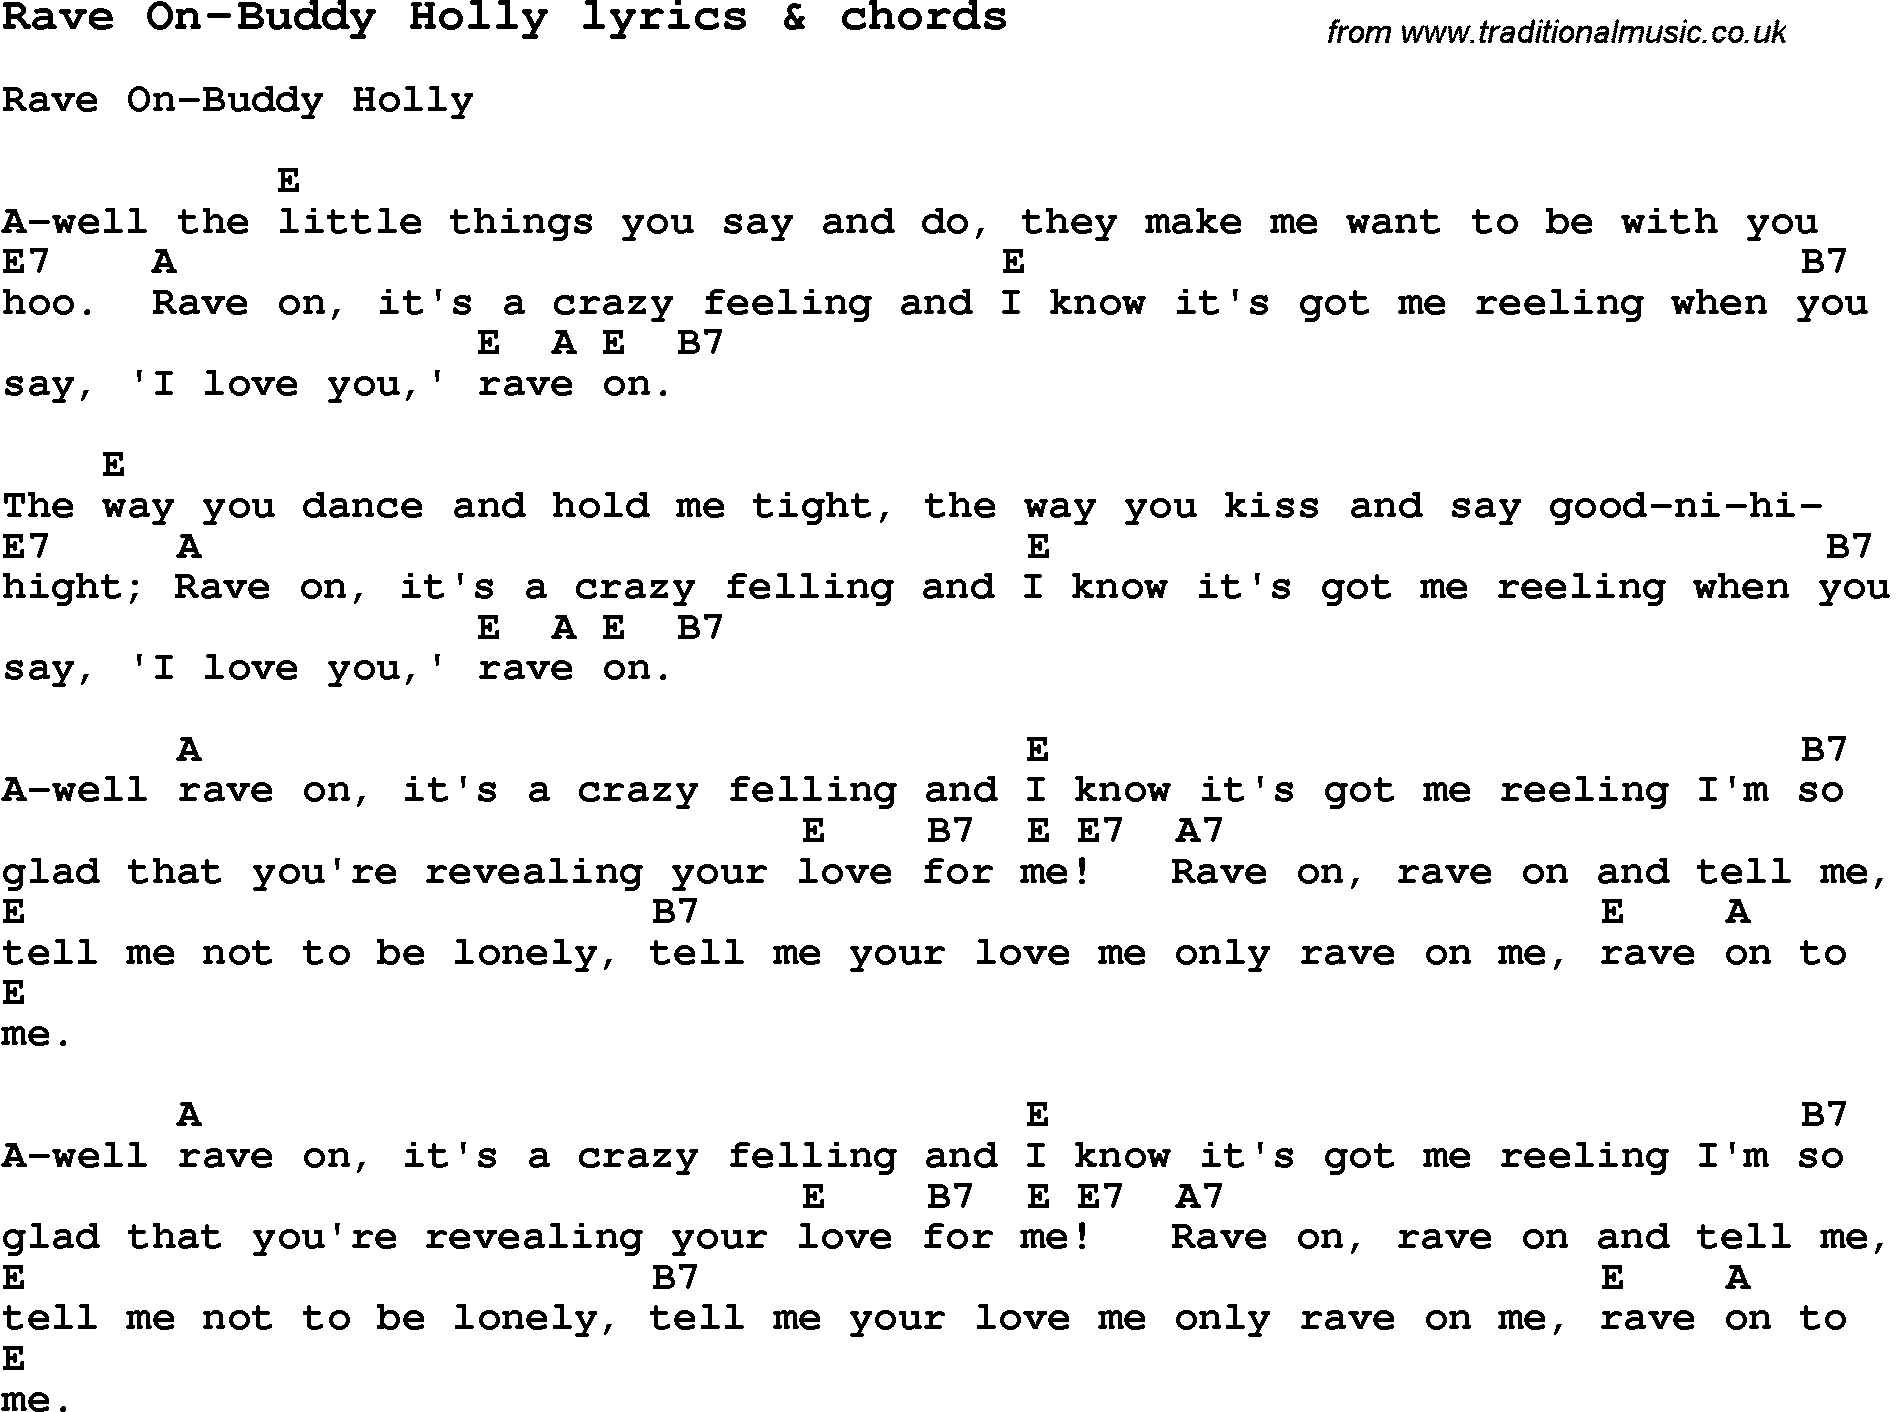 Love Song Lyrics for: Rave On-Buddy Holly with chords for Ukulele, Guitar Banjo etc.